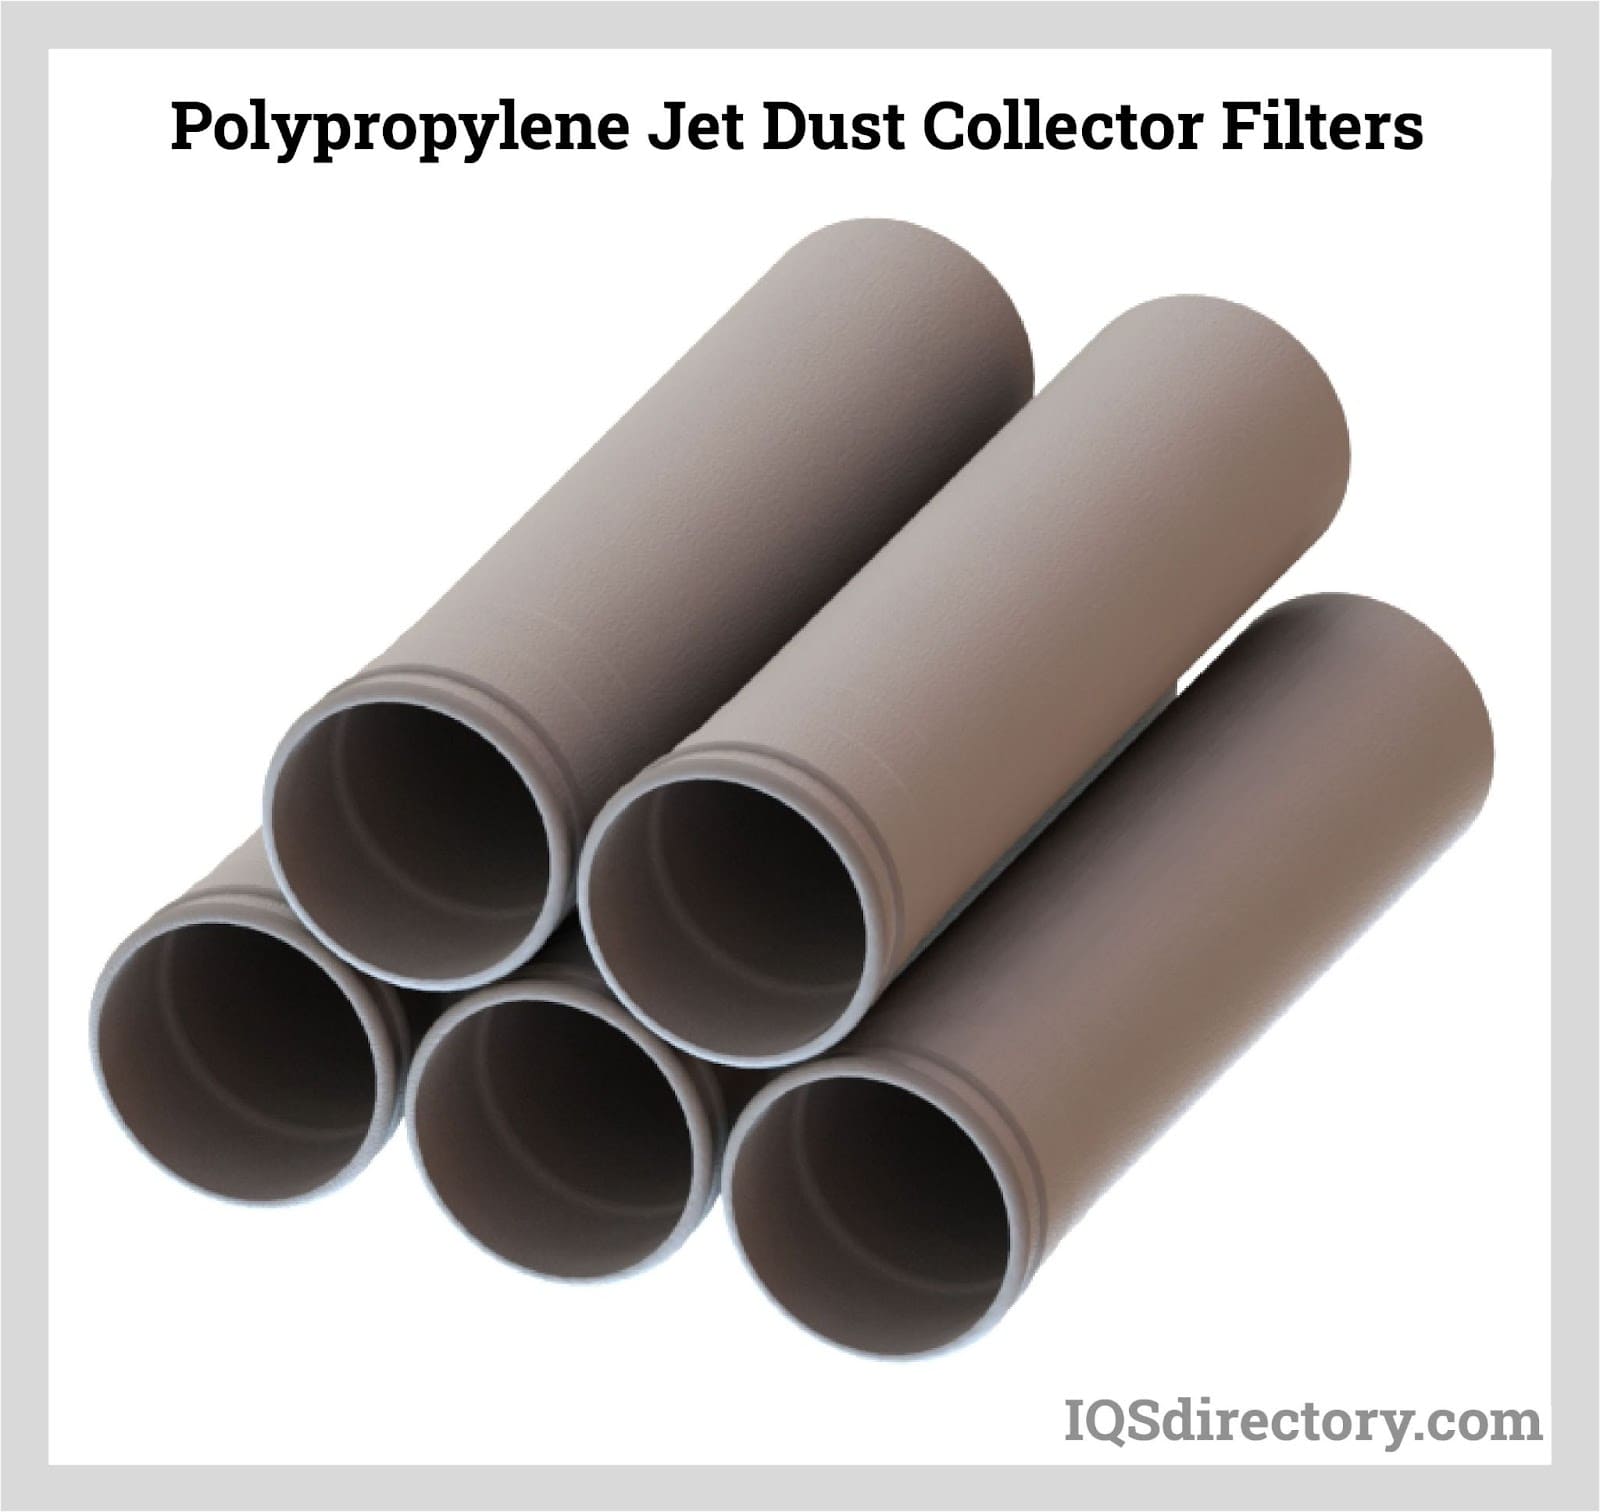 Polypropylene Jet Dust Collector Filters